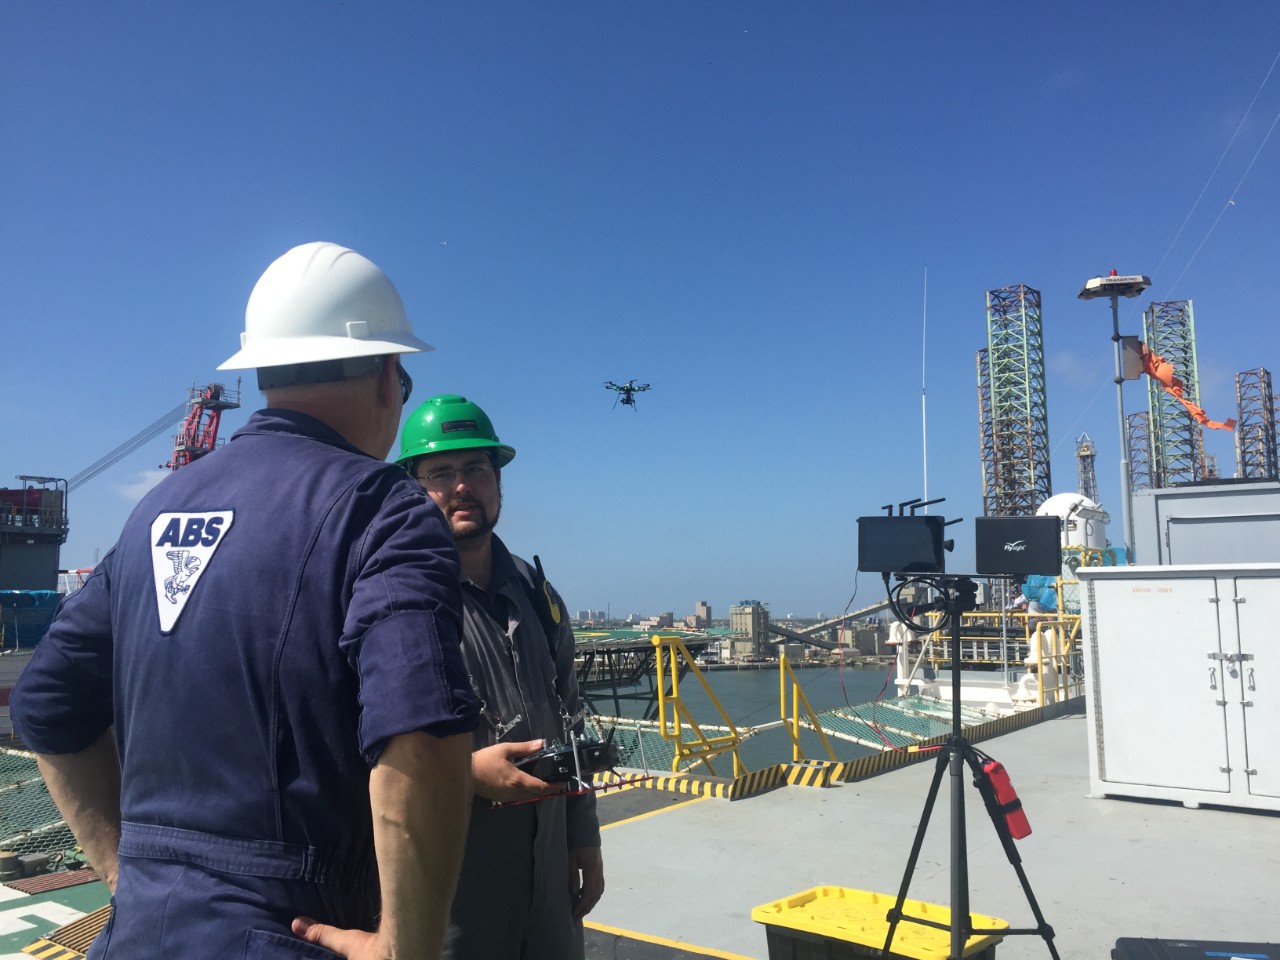 ABS surveyor witnessing a UAV demonstration